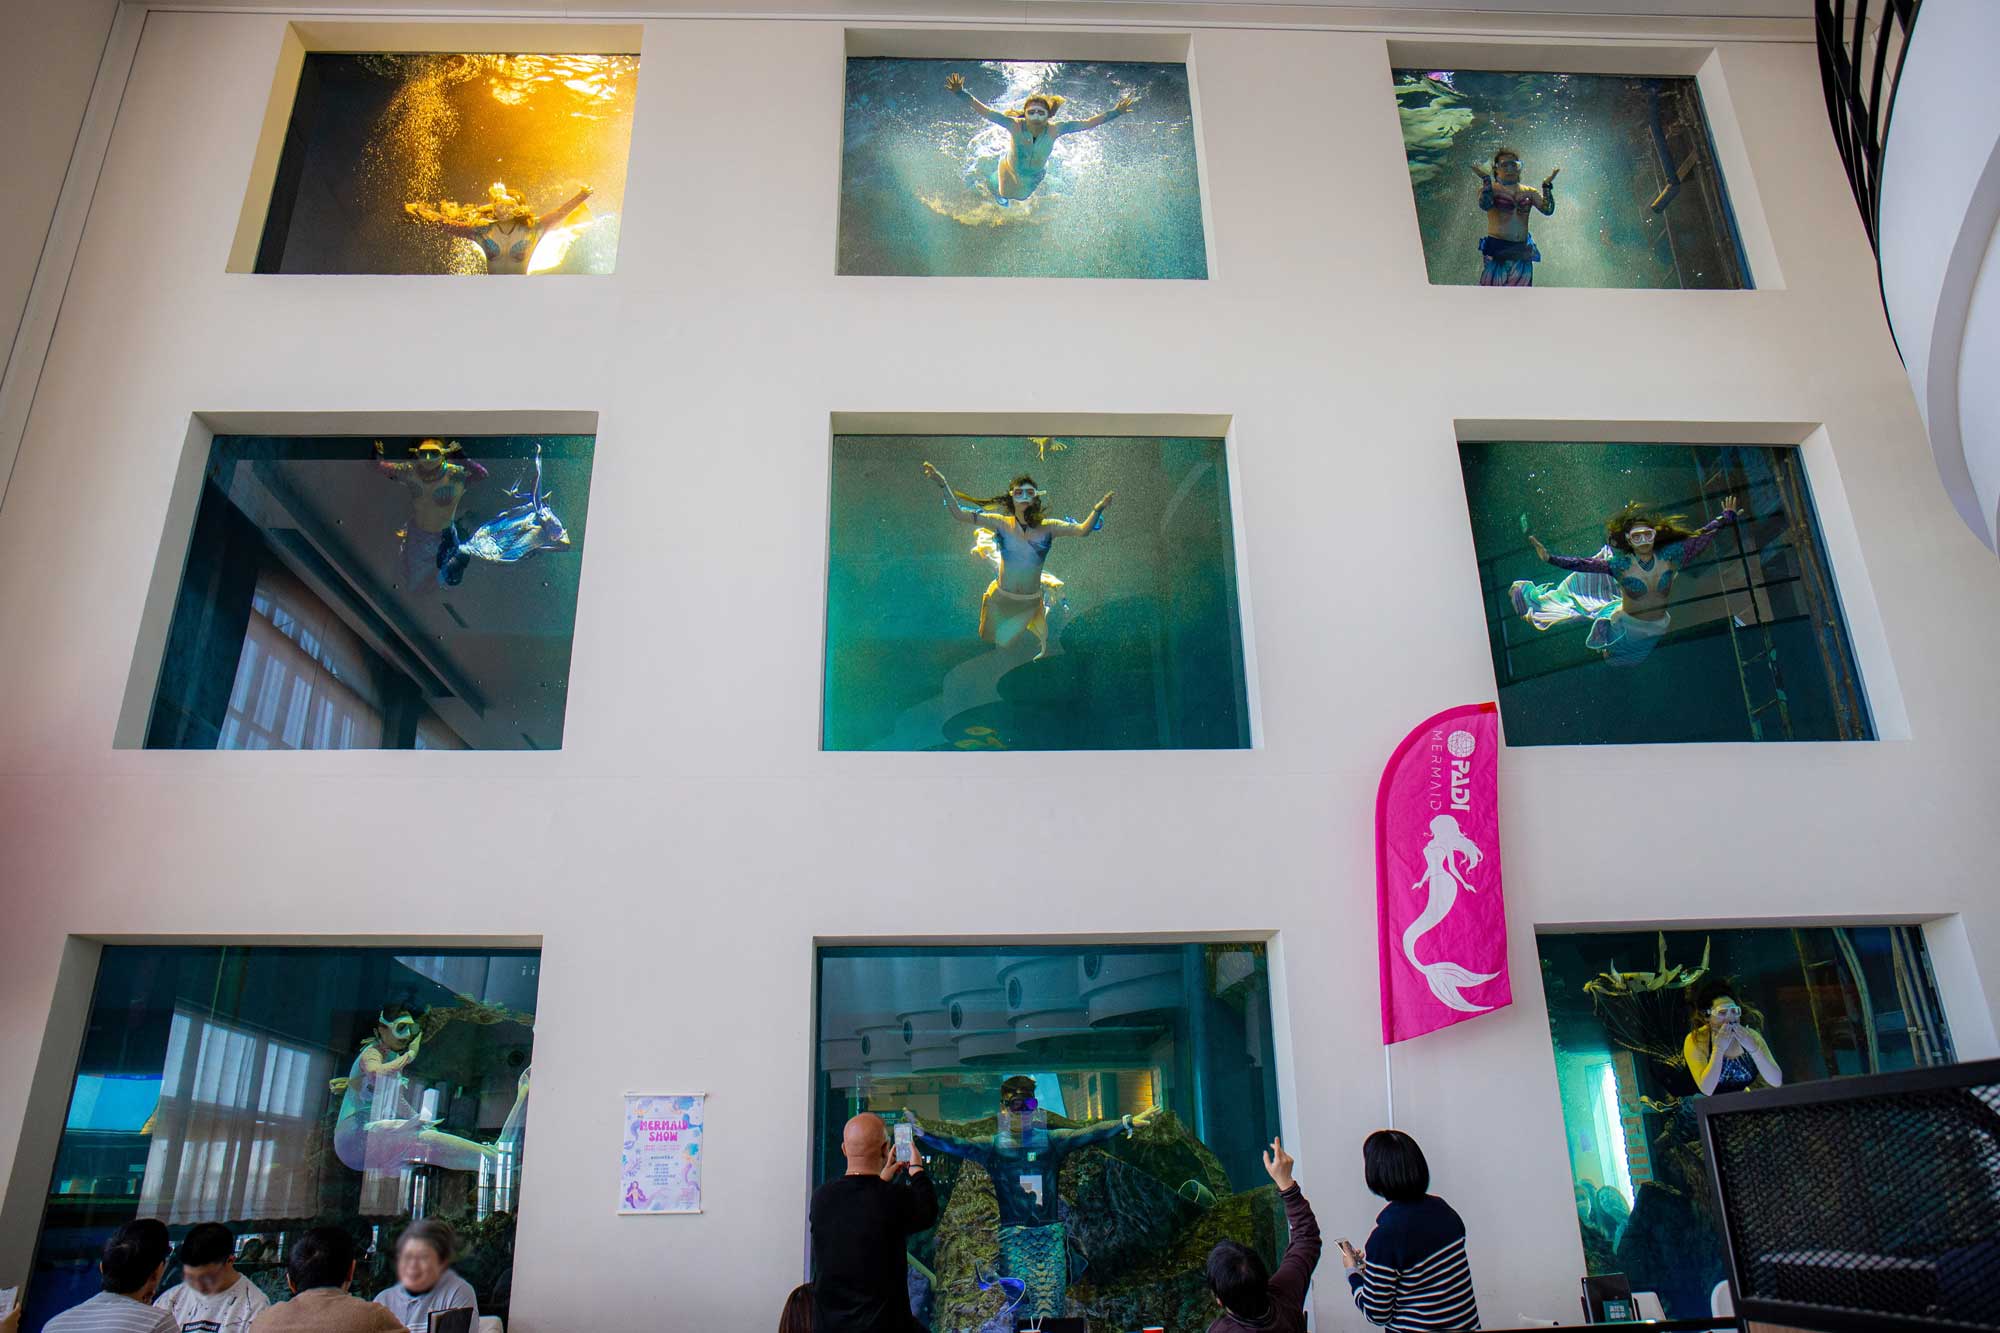 mermaids are performing in the pool inside restaurant